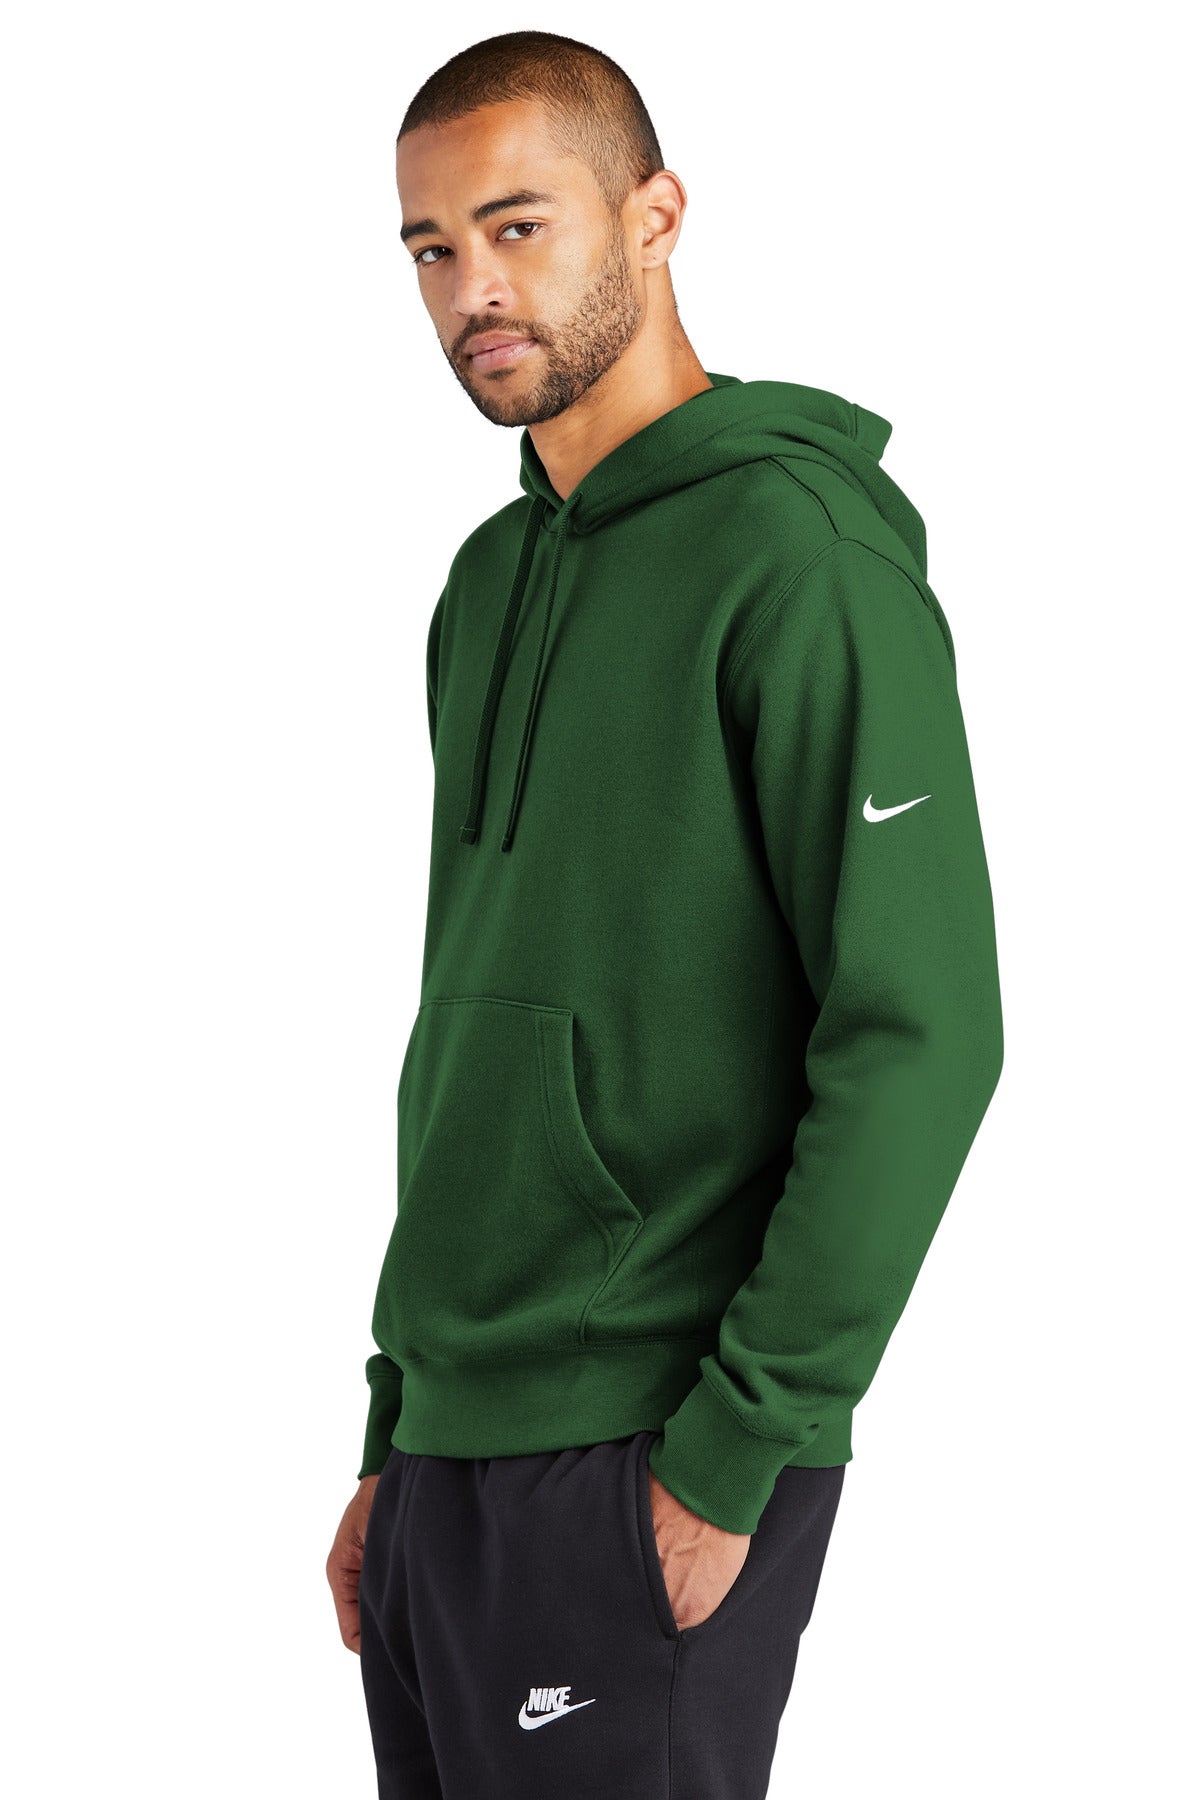 Nike - Sweat-shirt Nike Sportswear Vert Clair - Drest